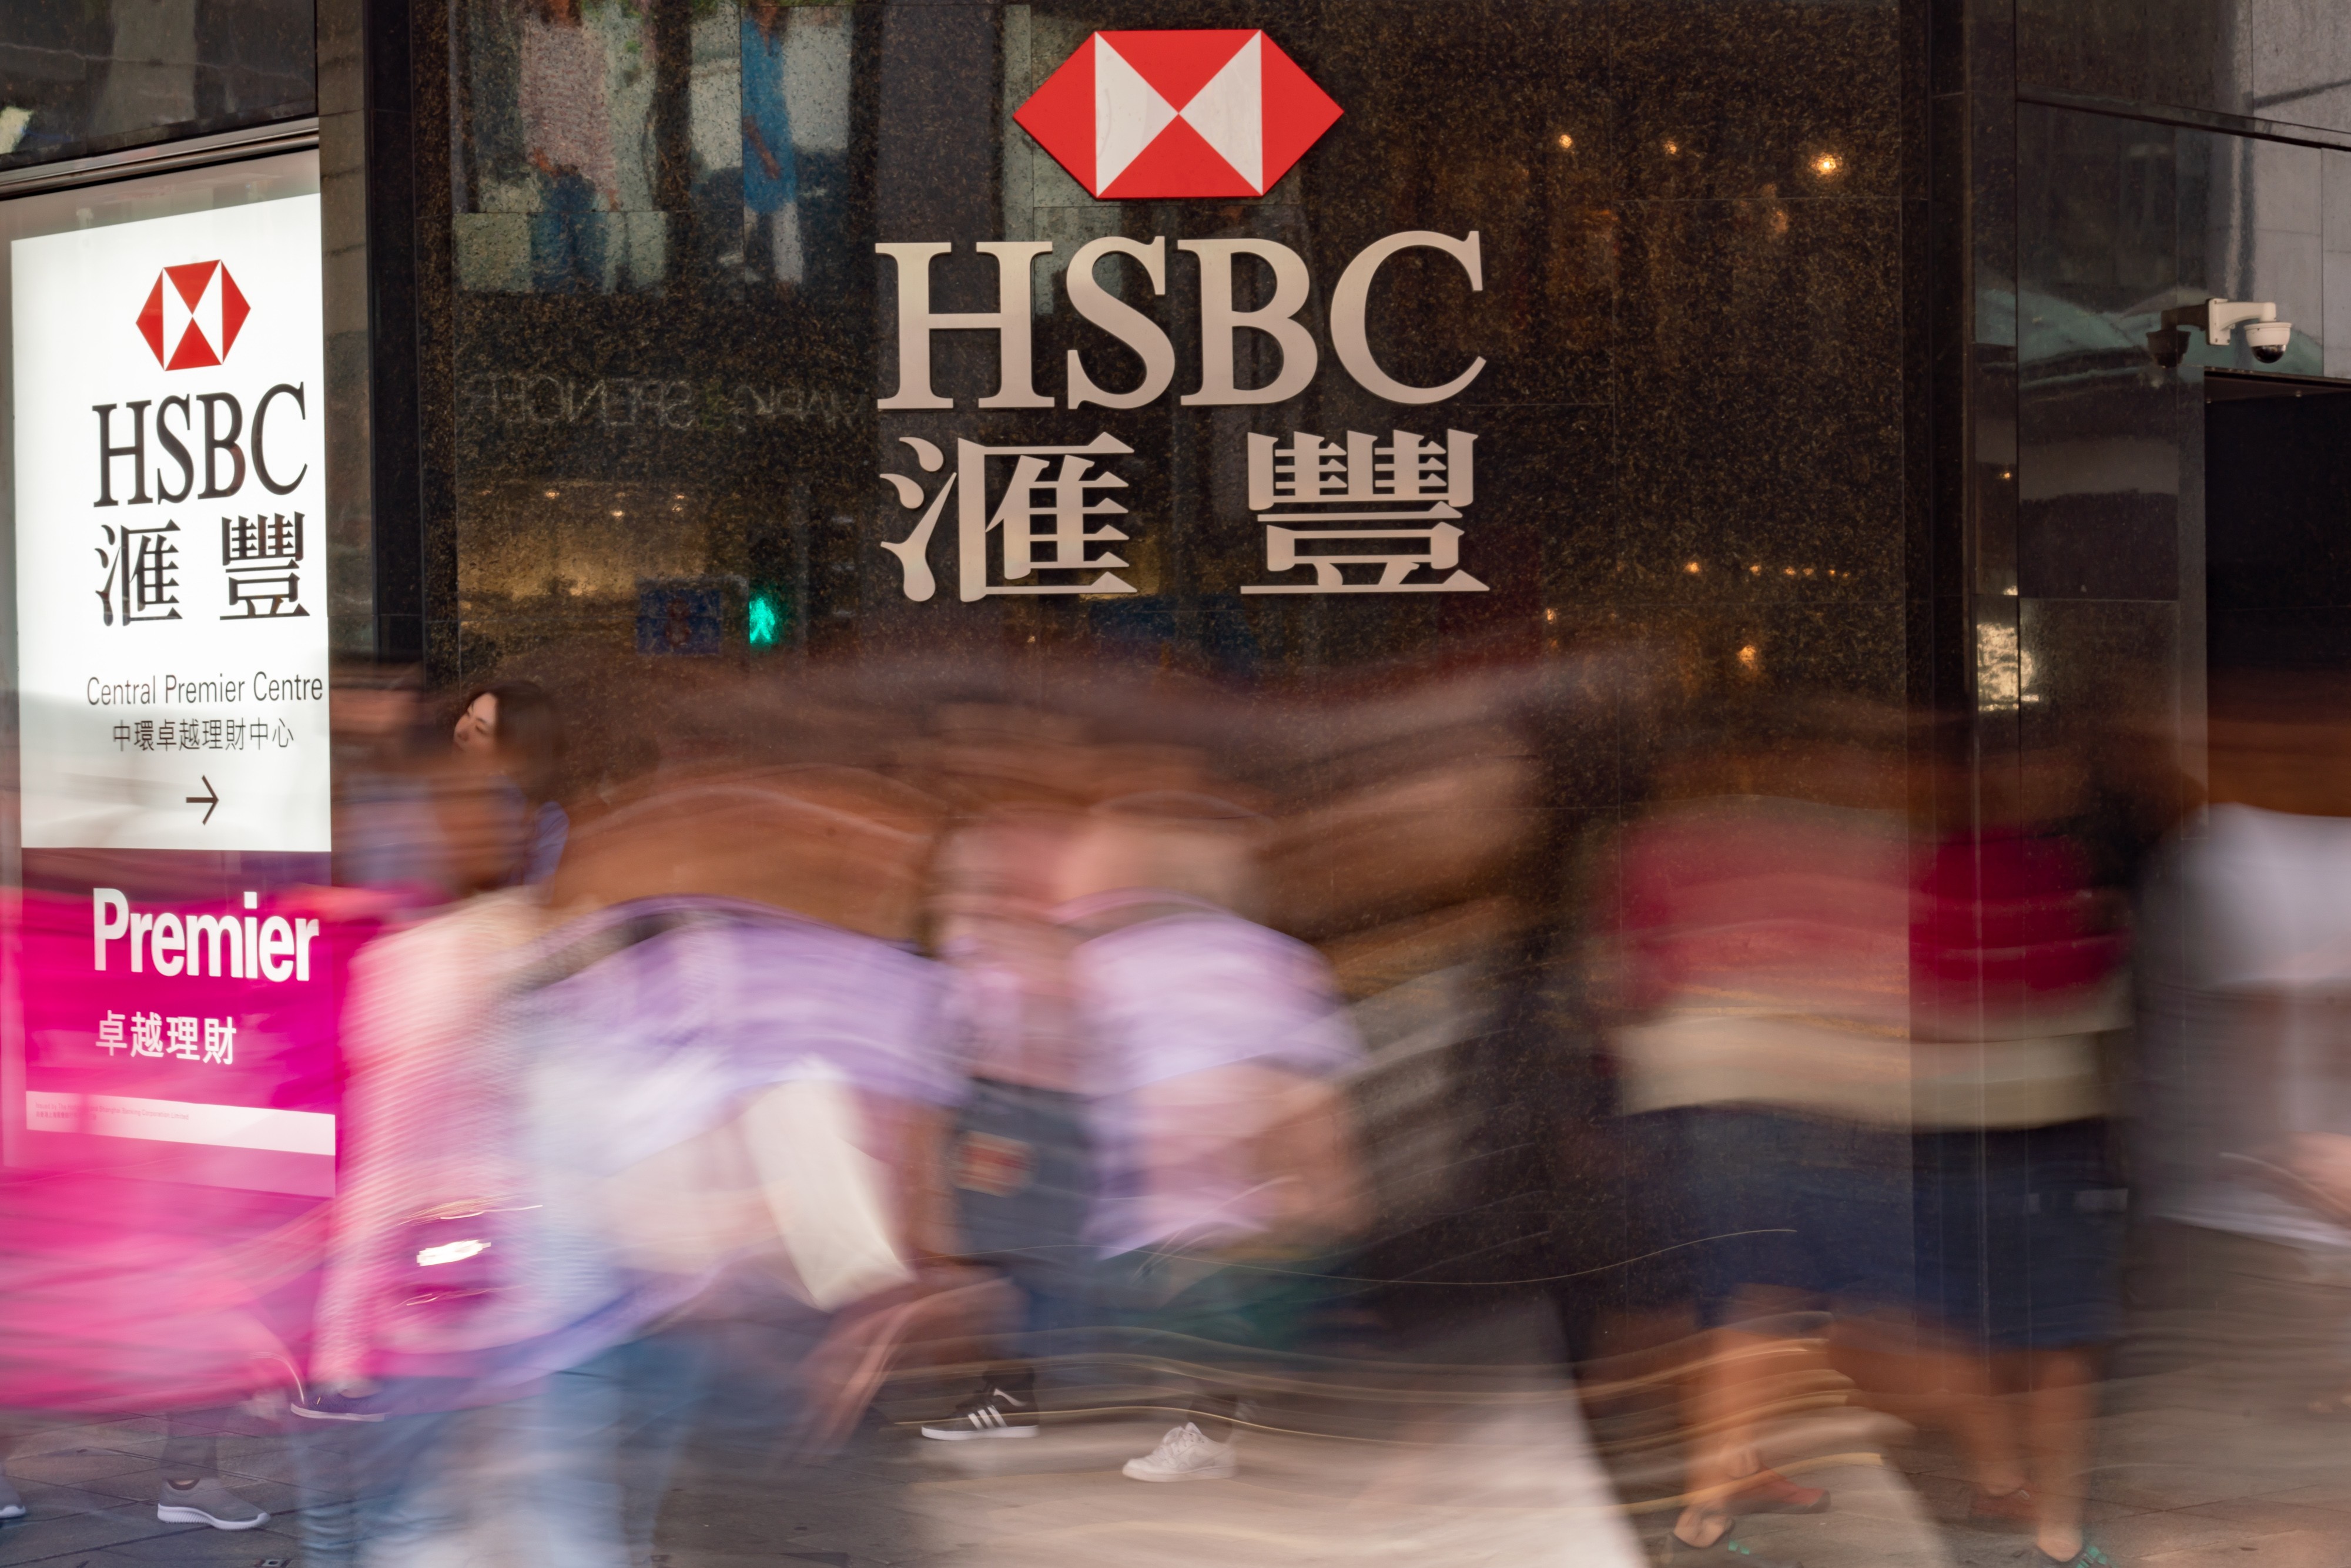 Pedestrians walk past an HSBC bank branch in Central, Hong Kong. Photo: Bloomberg